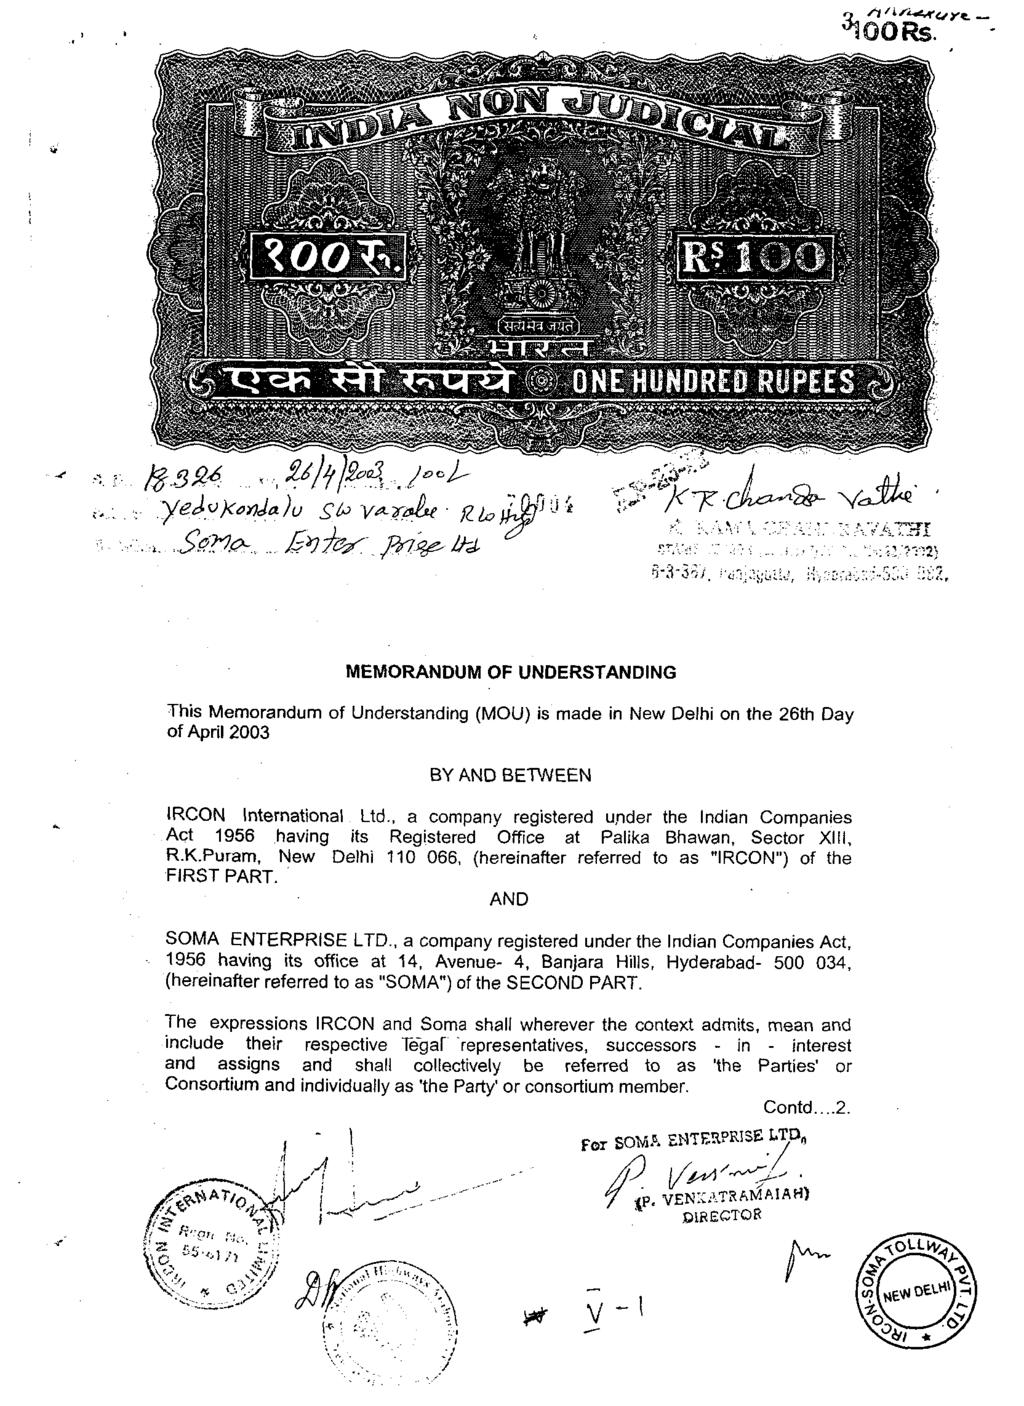 MEMORANDUM OF UNDERSTANDING This Memorandum of Understanding (MOU) is made in New Delhi on the 26th Day of April 2003 BY AND BETWEEN. IRCON International Ltd.